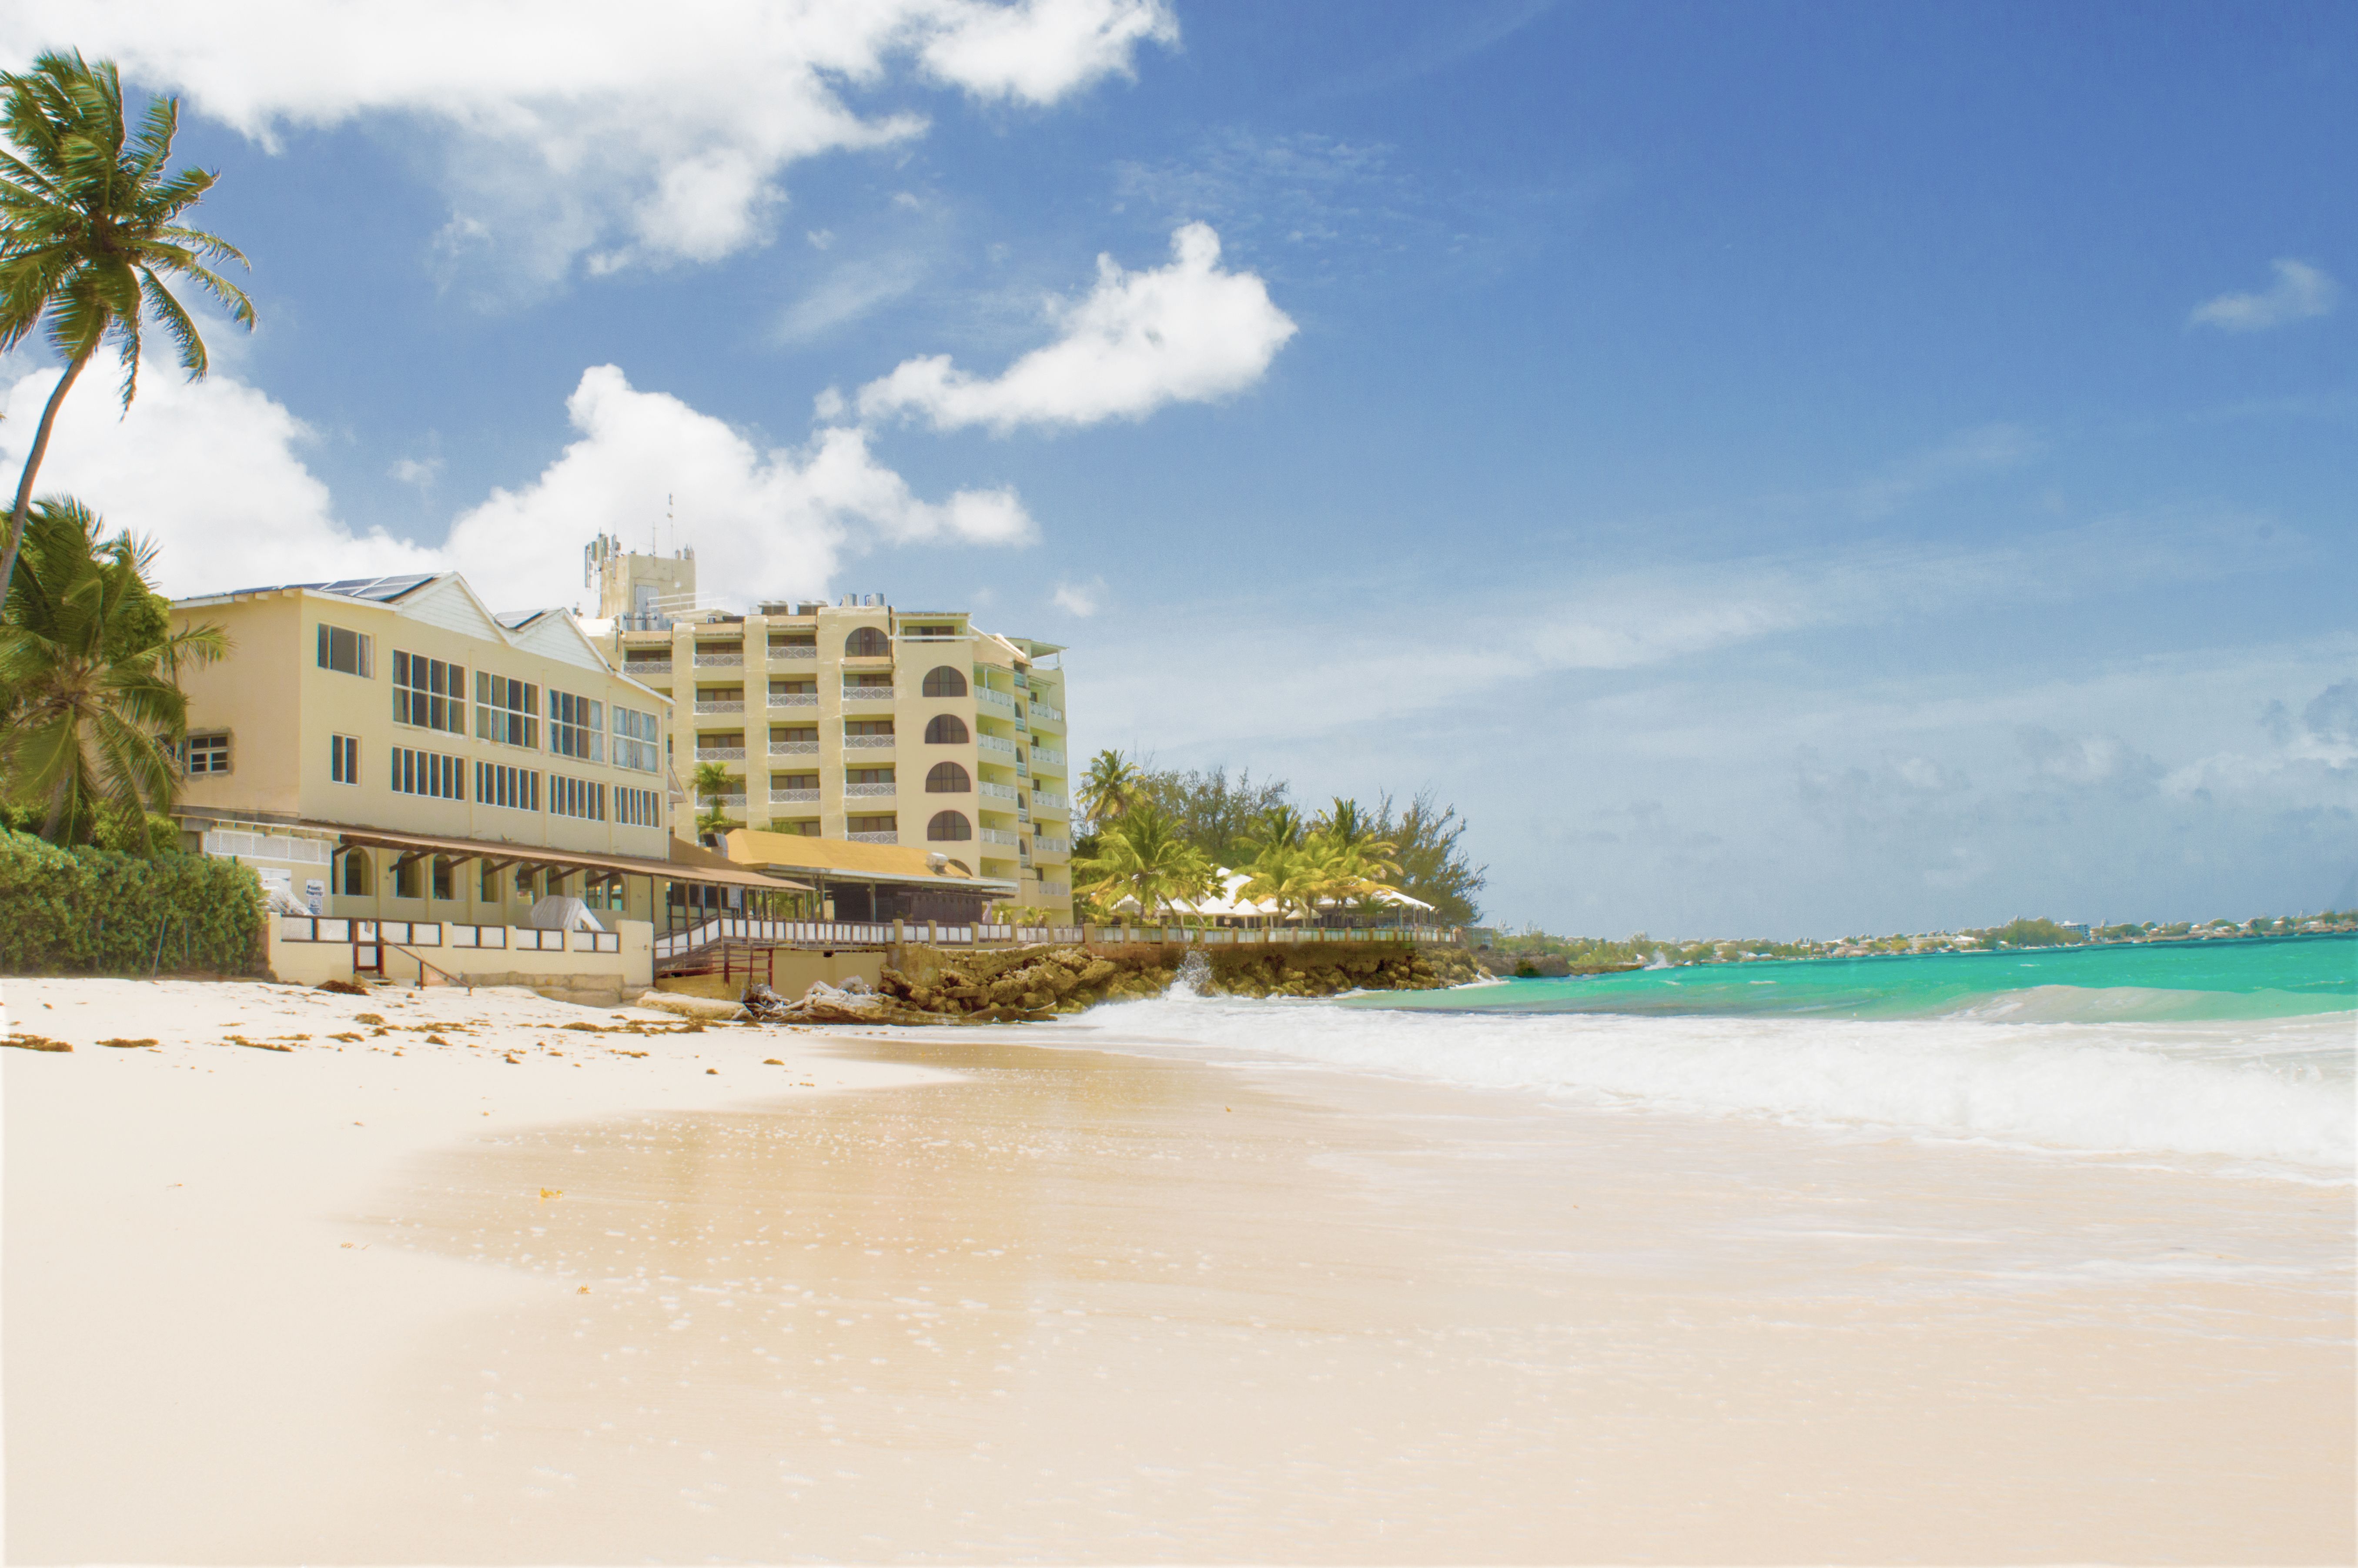 Barbados Beach Club Caribbean Holidays 2020 2021 Book Online